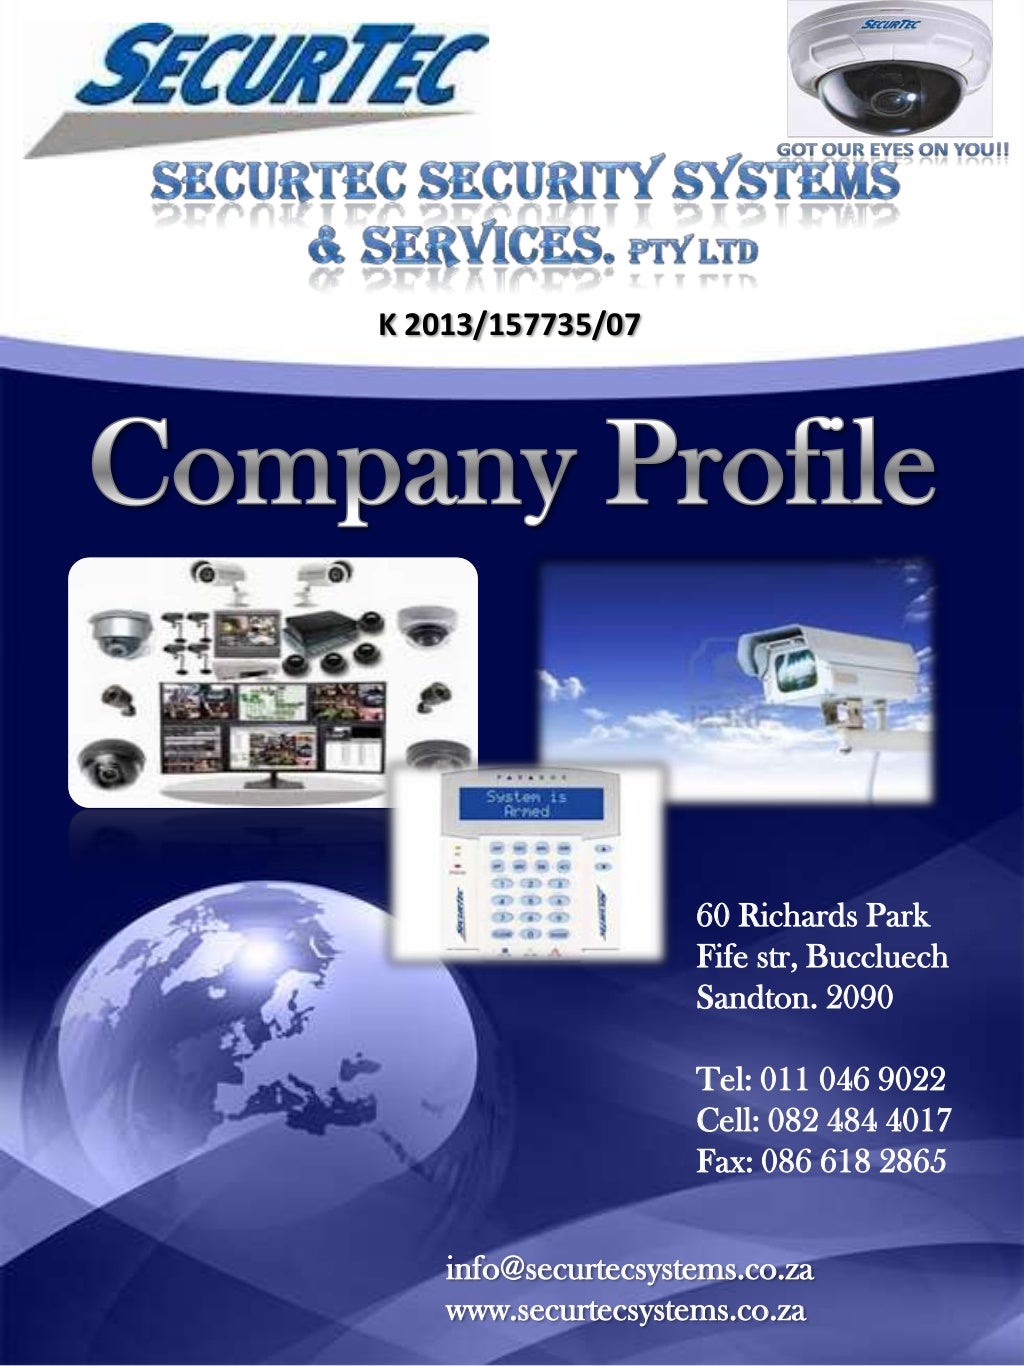 presentation of security company